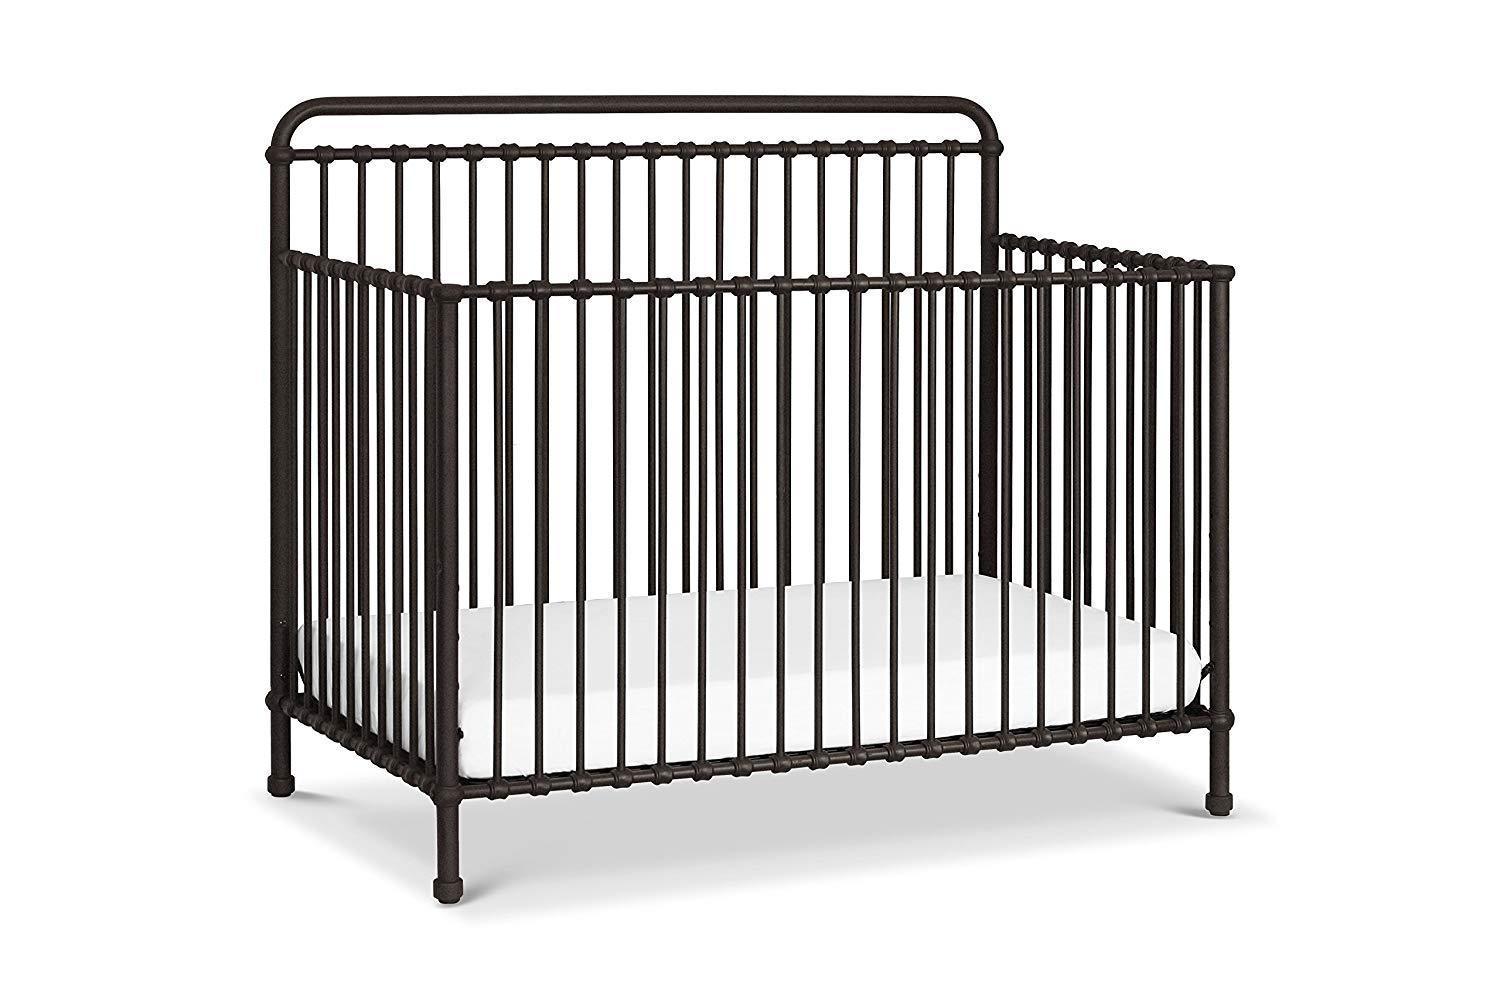 Namesake Winston 4-in-1 Convertible Iron Crib